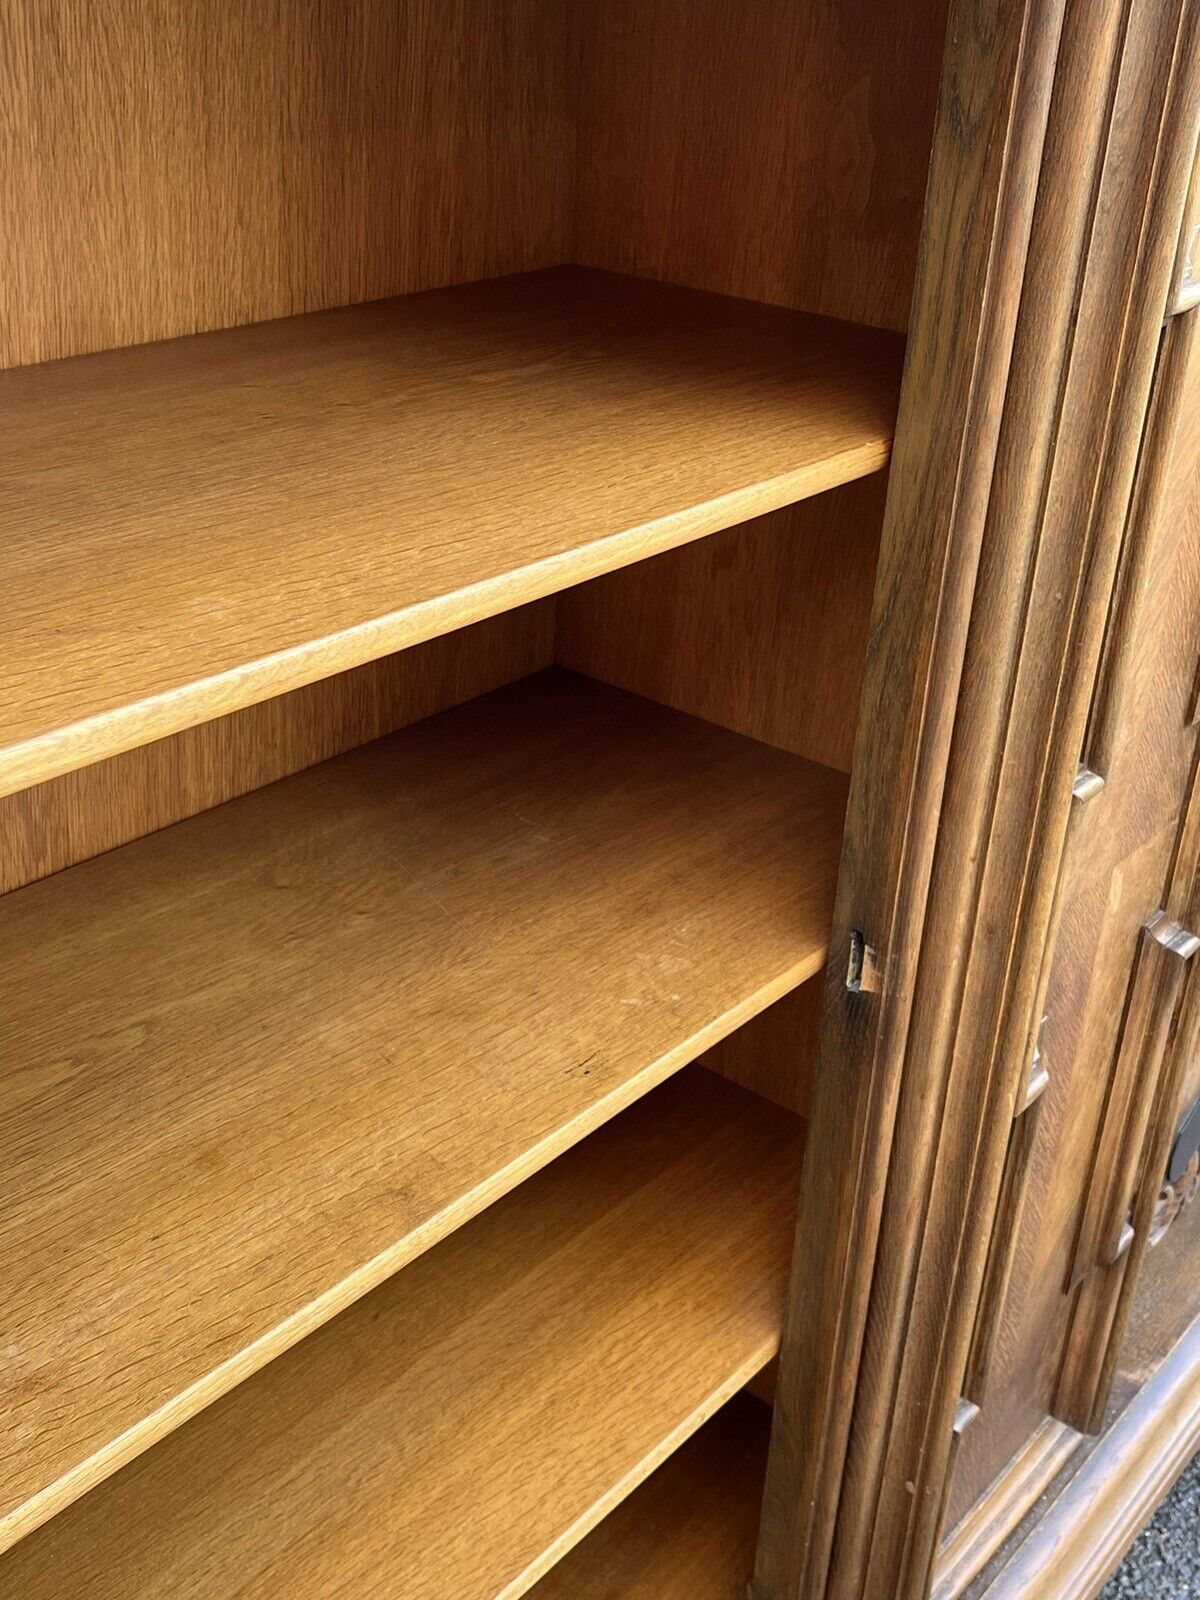 Walnut & Carved Oak Drinks Cabinet/ Sideboard, Large In Size, Quality Piece